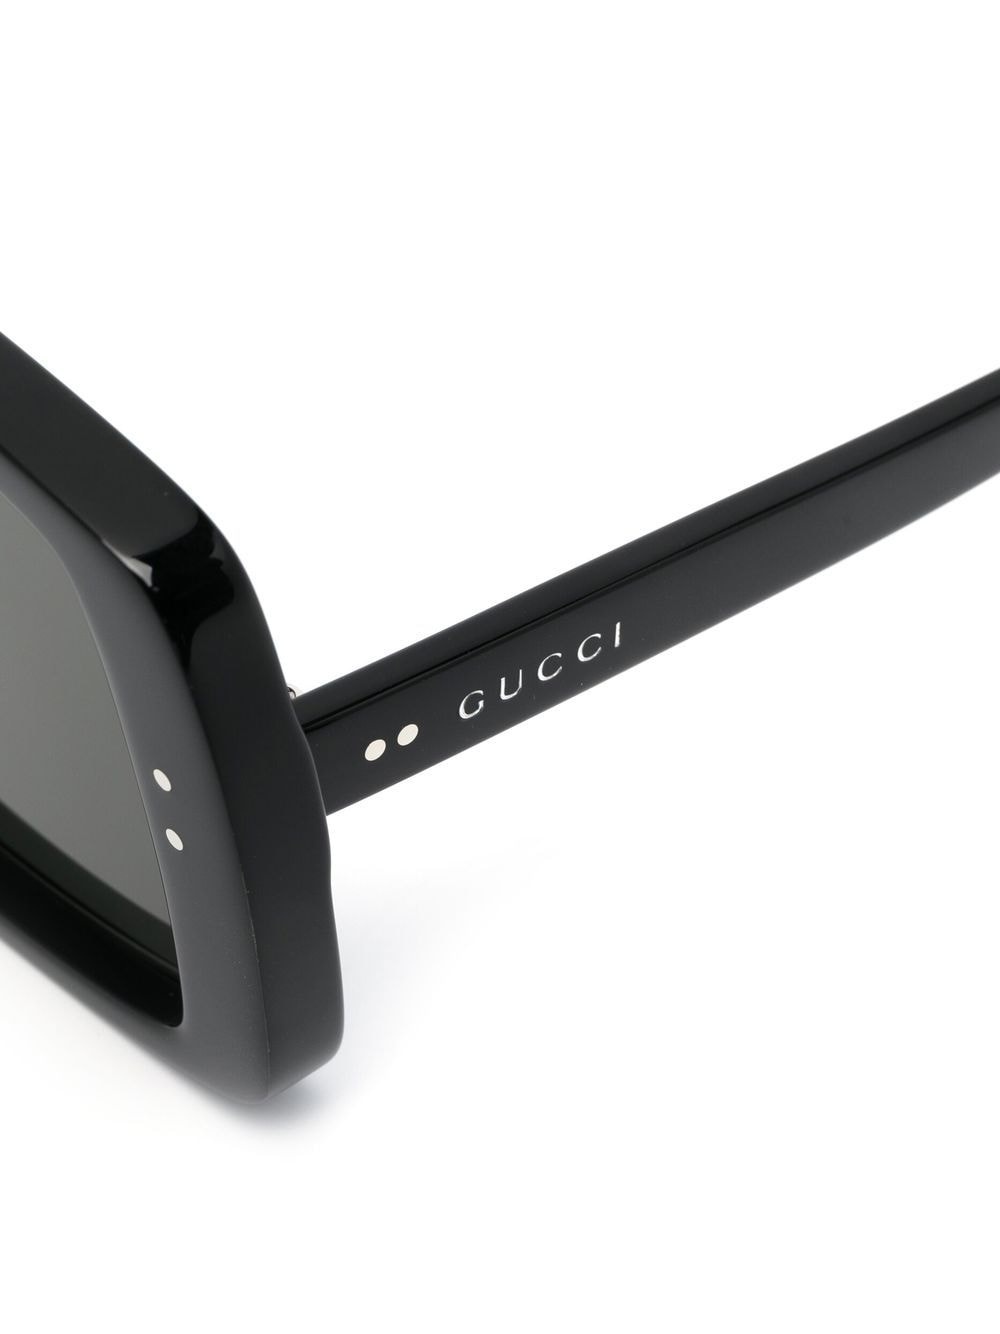 oversized sunglasses - 3